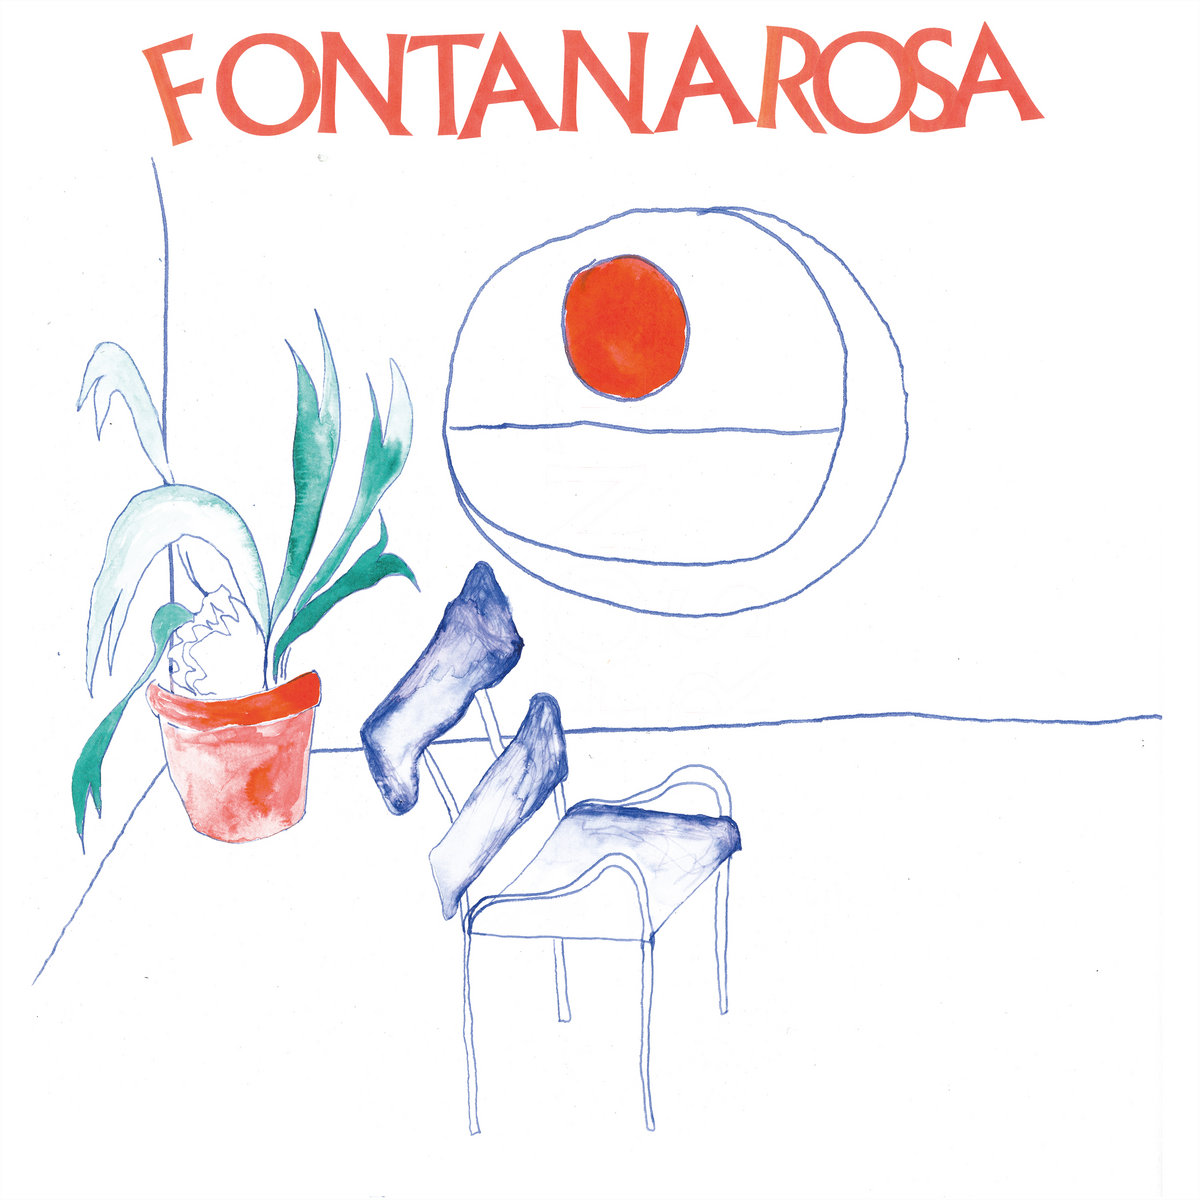 Fontanarosa - Are You There?